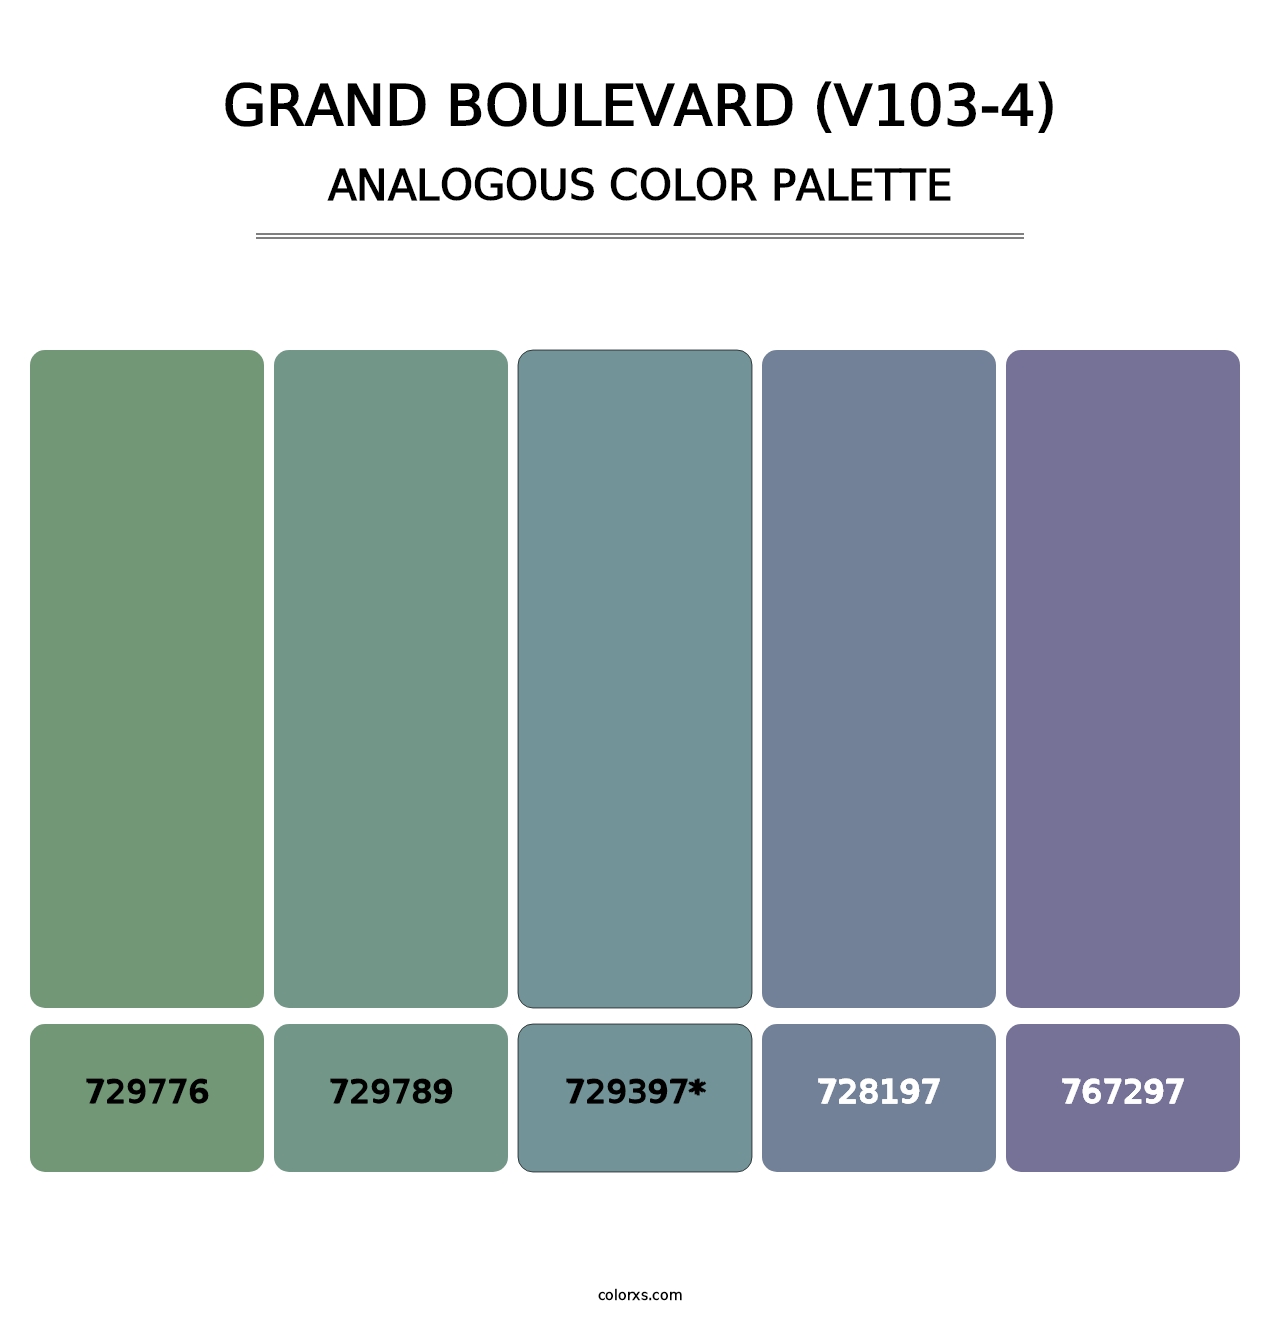 Grand Boulevard (V103-4) - Analogous Color Palette